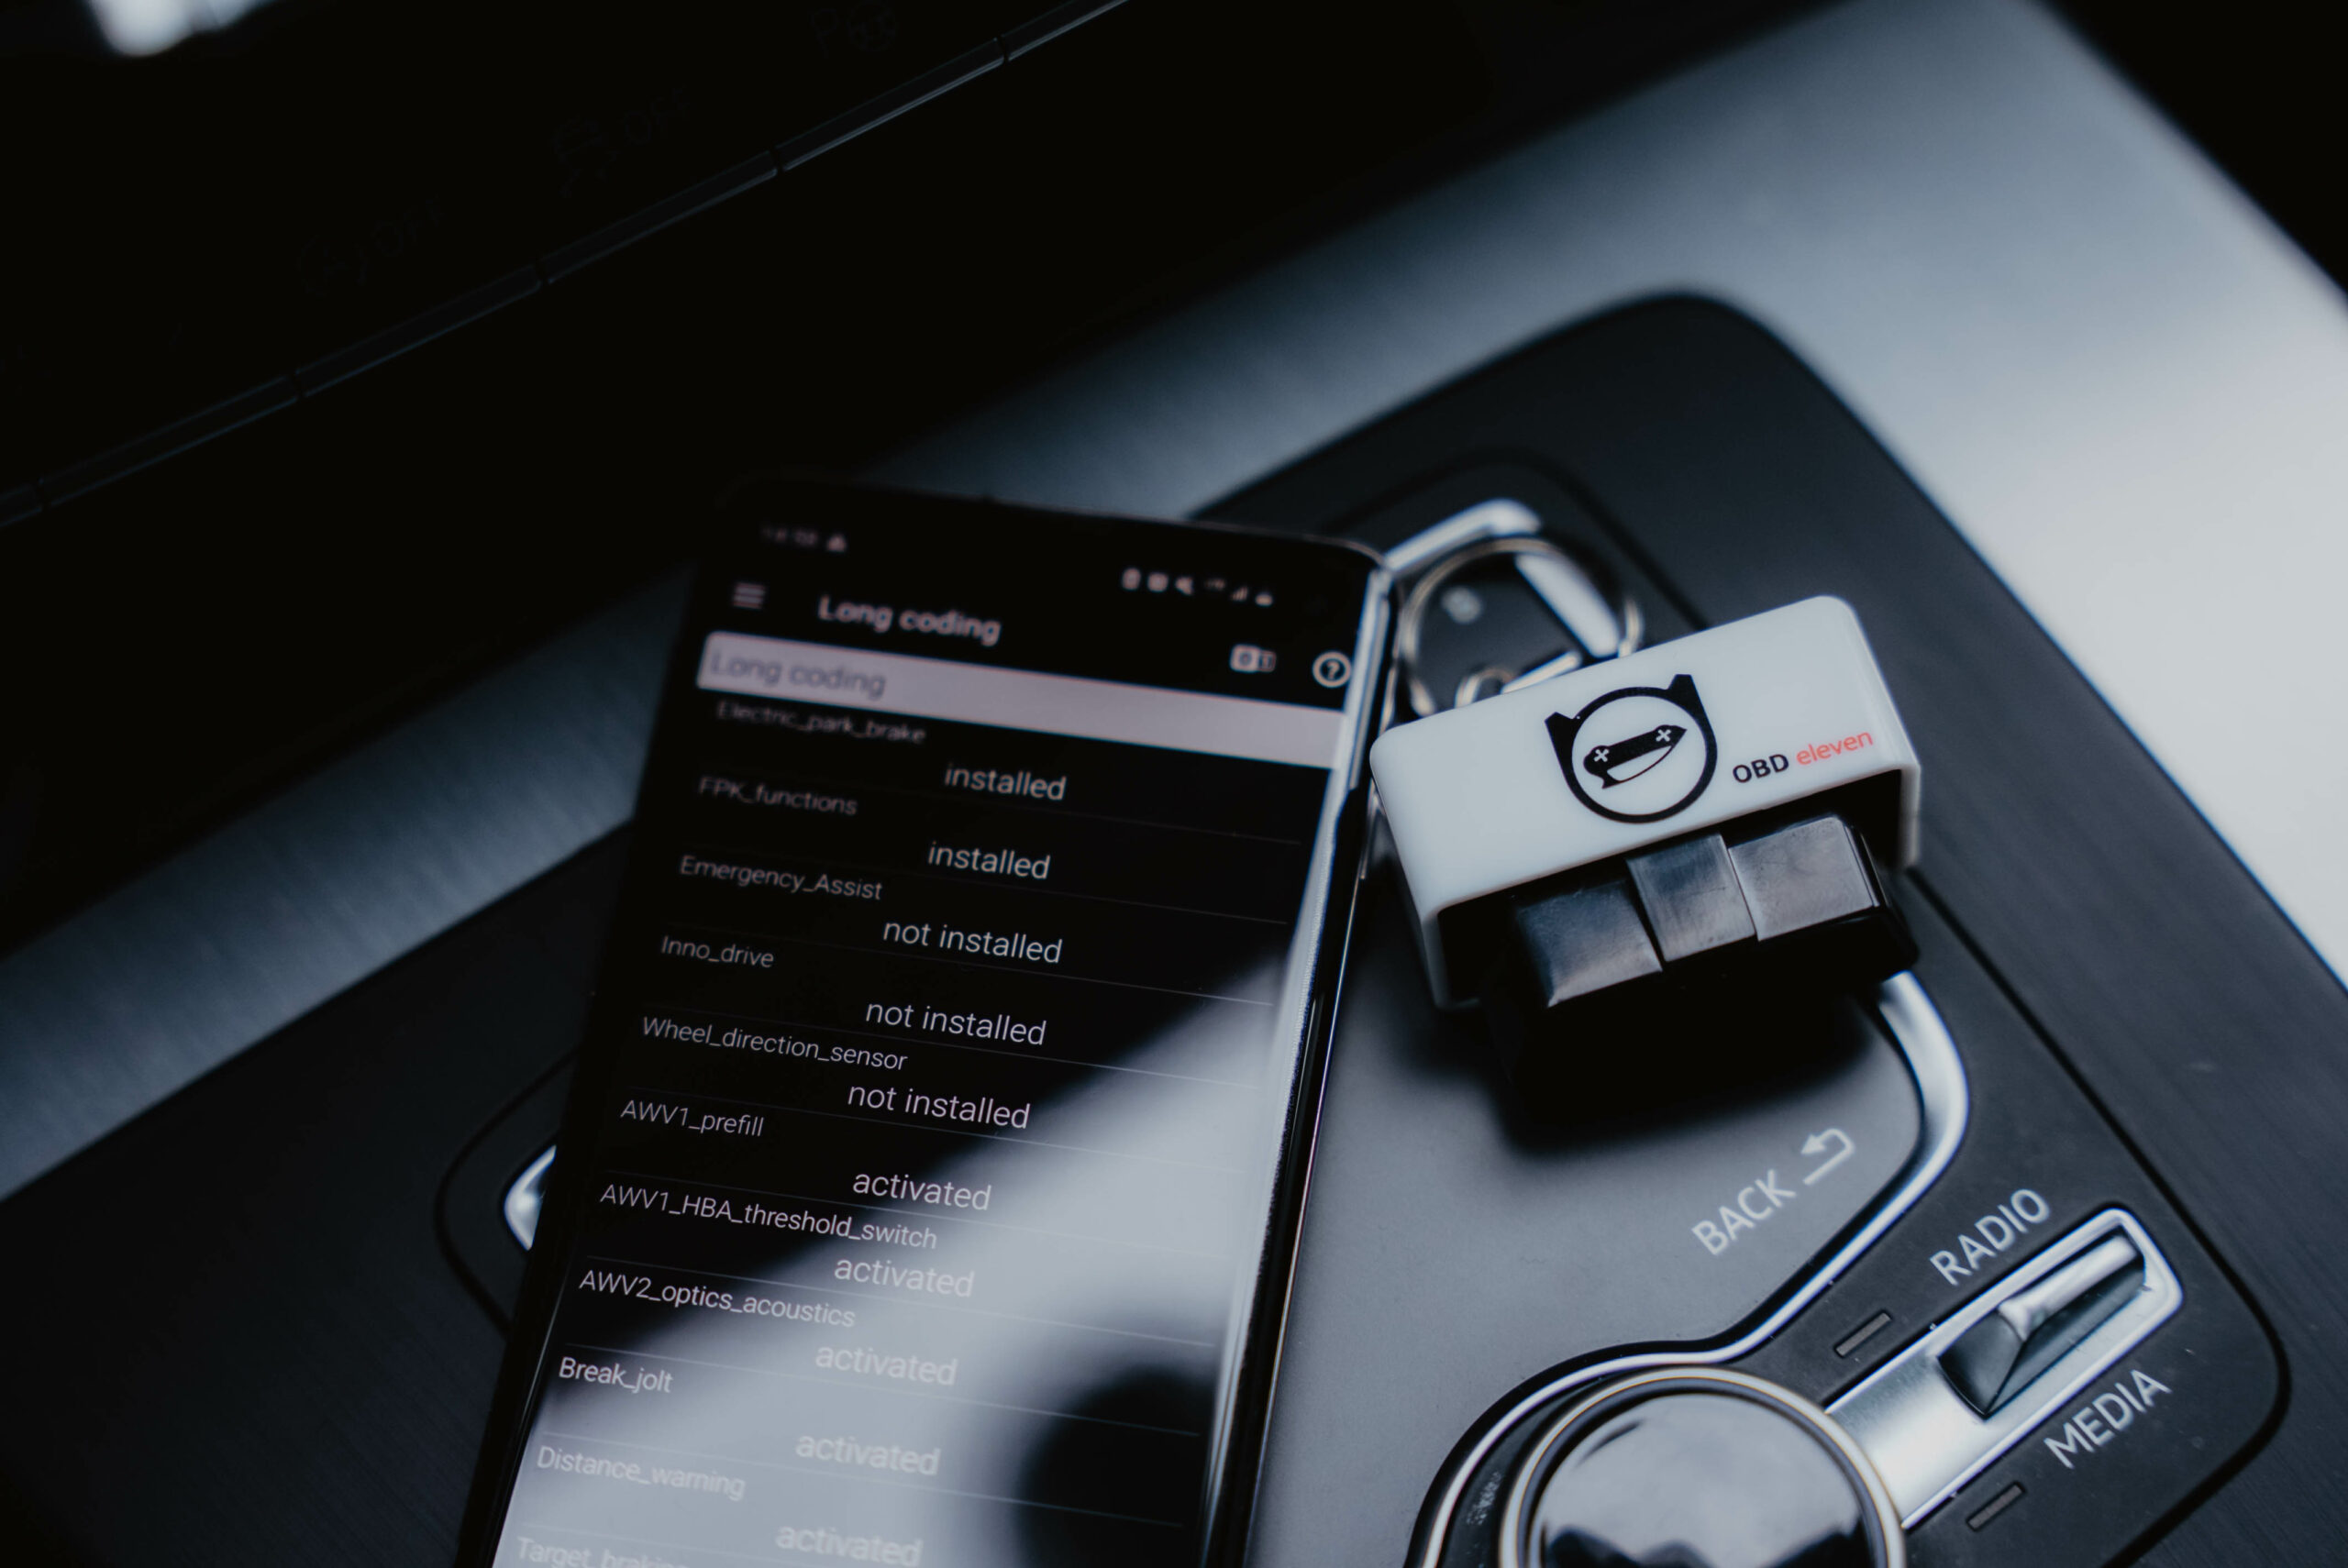 OBDeleven: Unlock hidden features + coding + diagnostics for your car